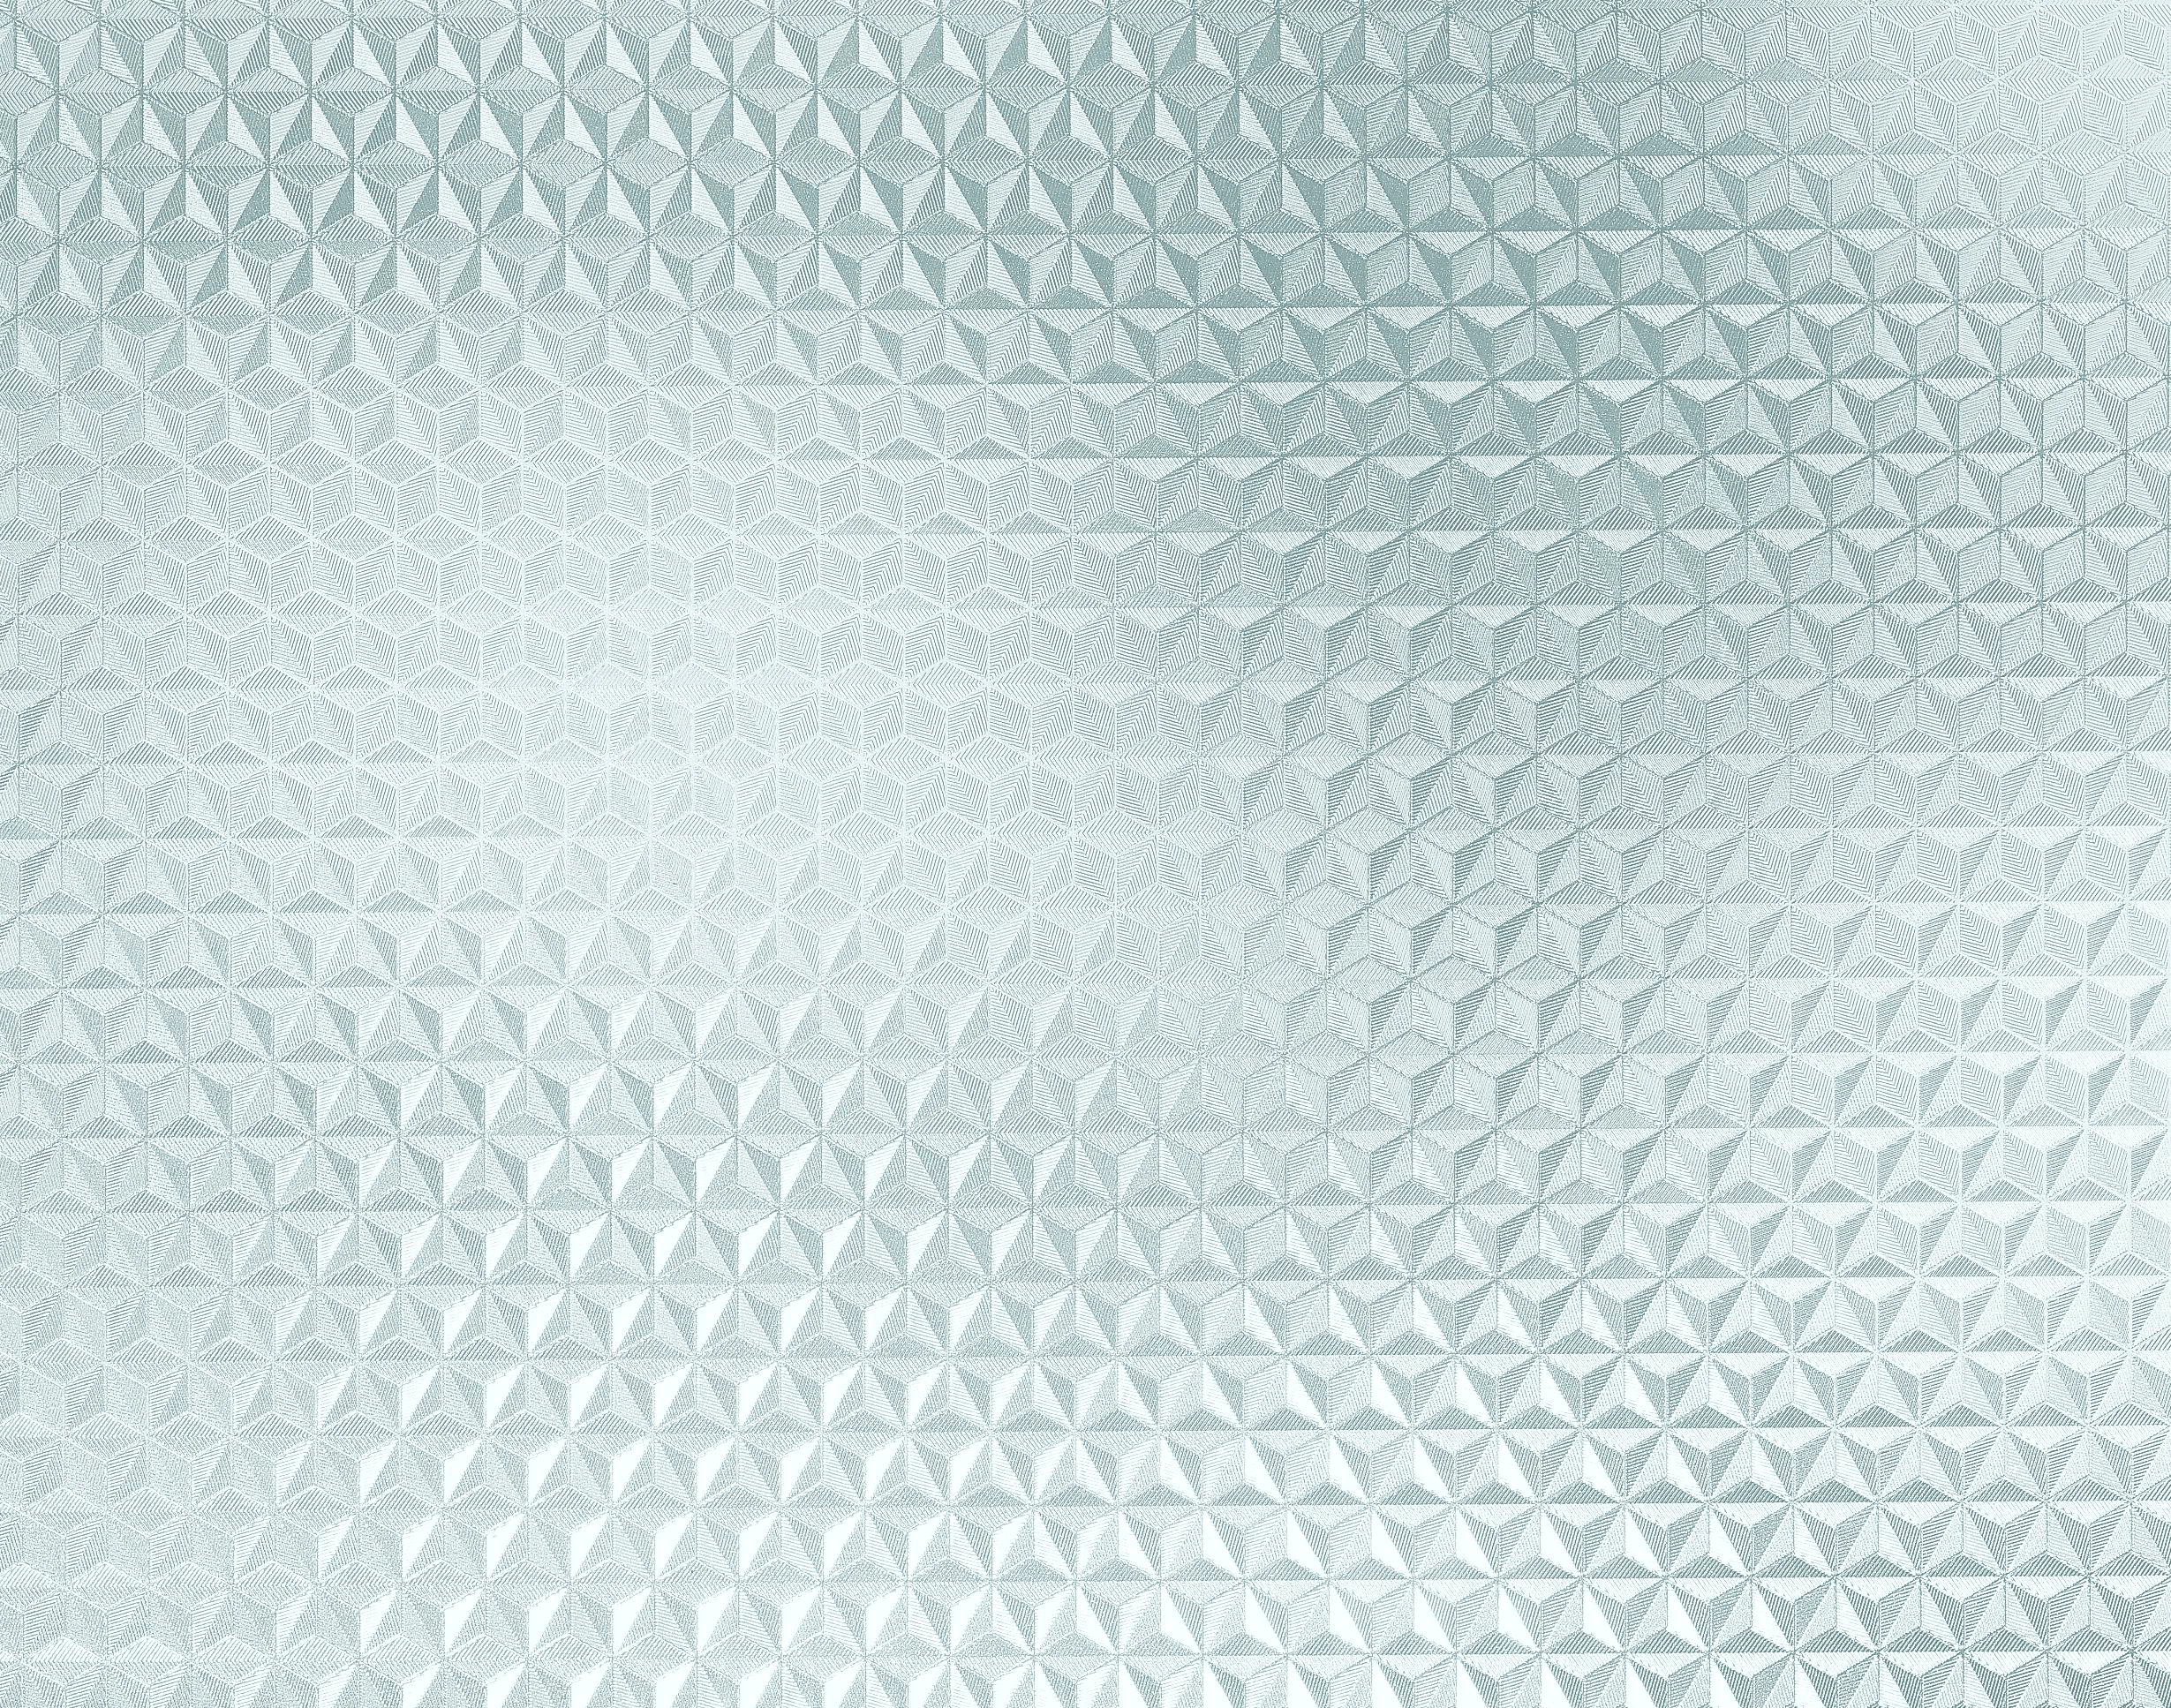 d-c-fix Klebefolie Steps Transparent 45 cm x 200 cm kaufen bei OBI